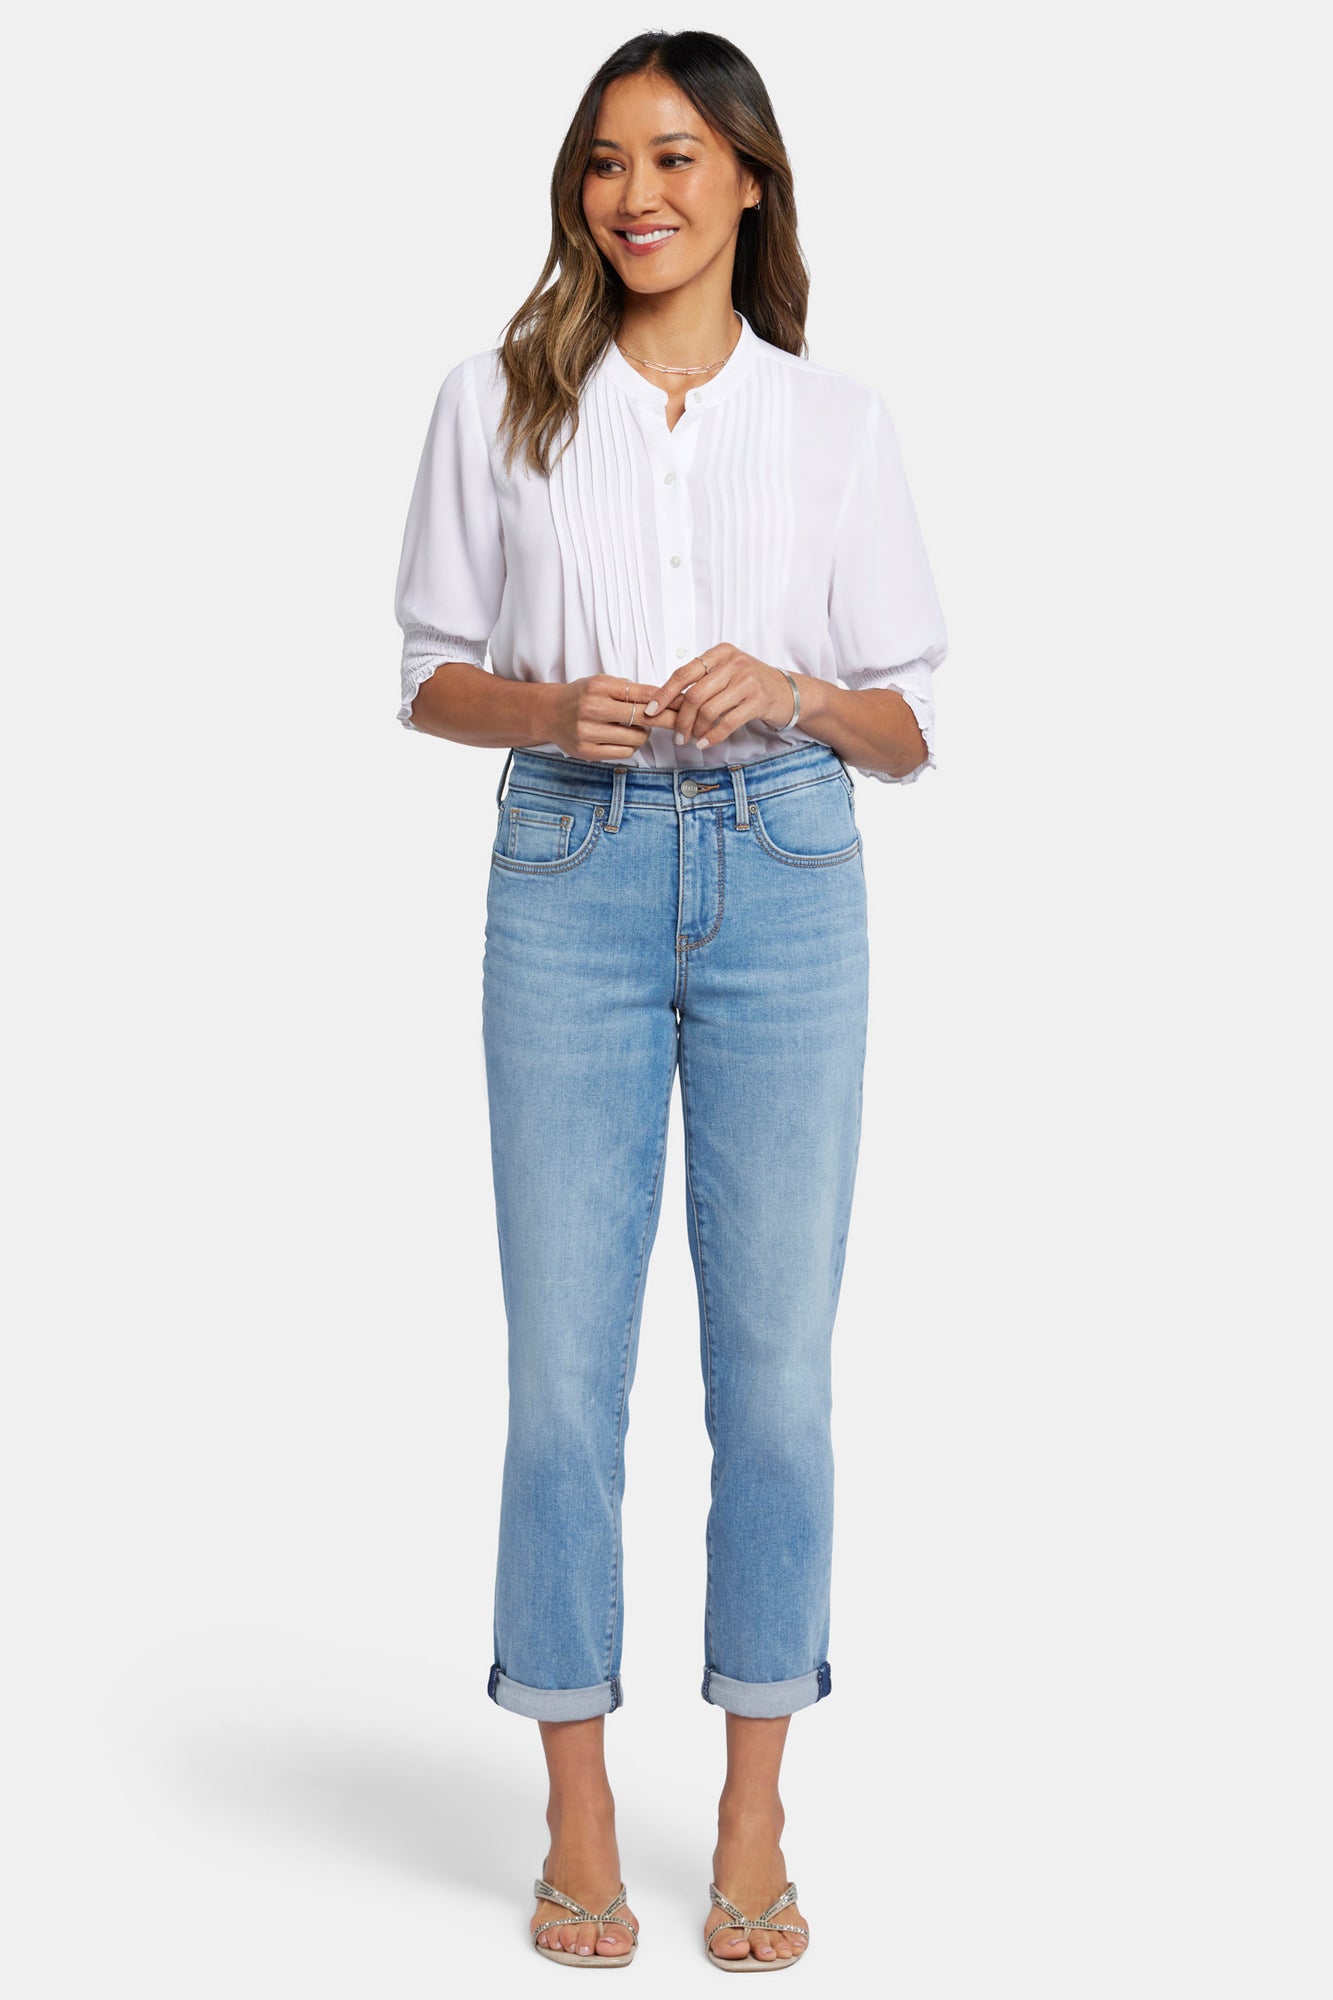 Margot Girlfriend Jeans In Petite With Roll Cuffs - Quinta Blue | NYDJ